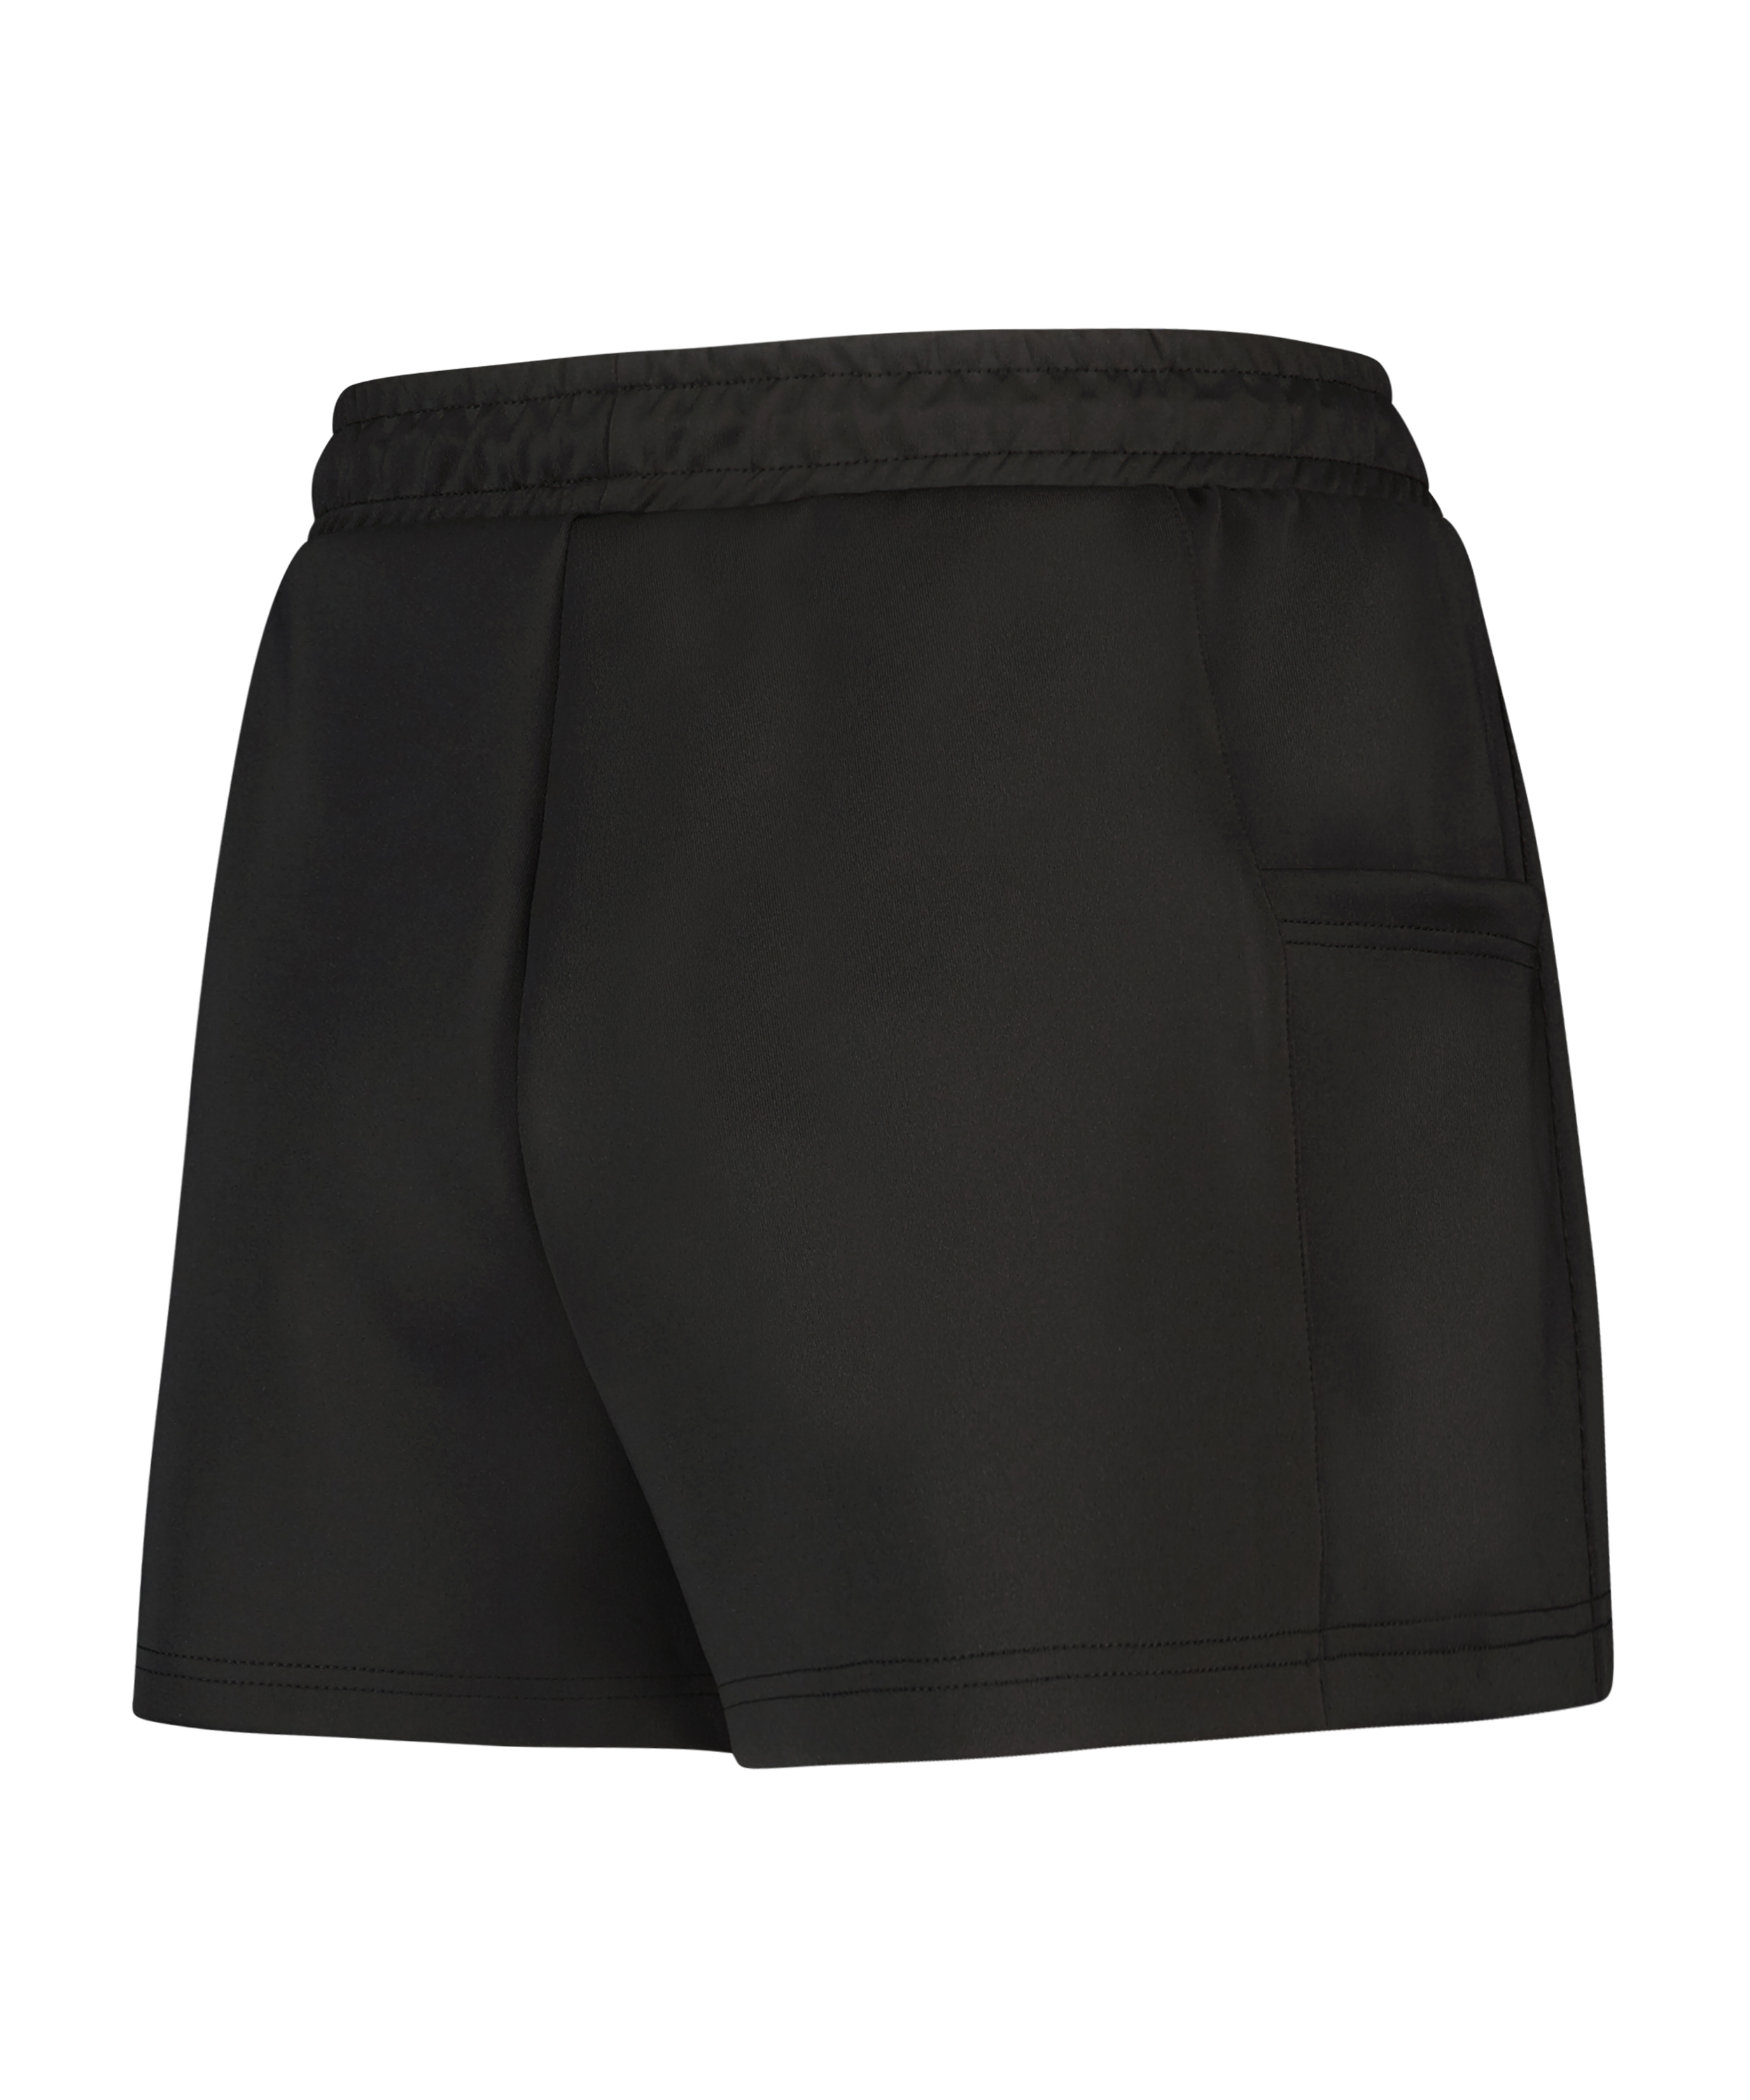 HKMX Pantalones cortos de cintura alta Ruby, Negro, main